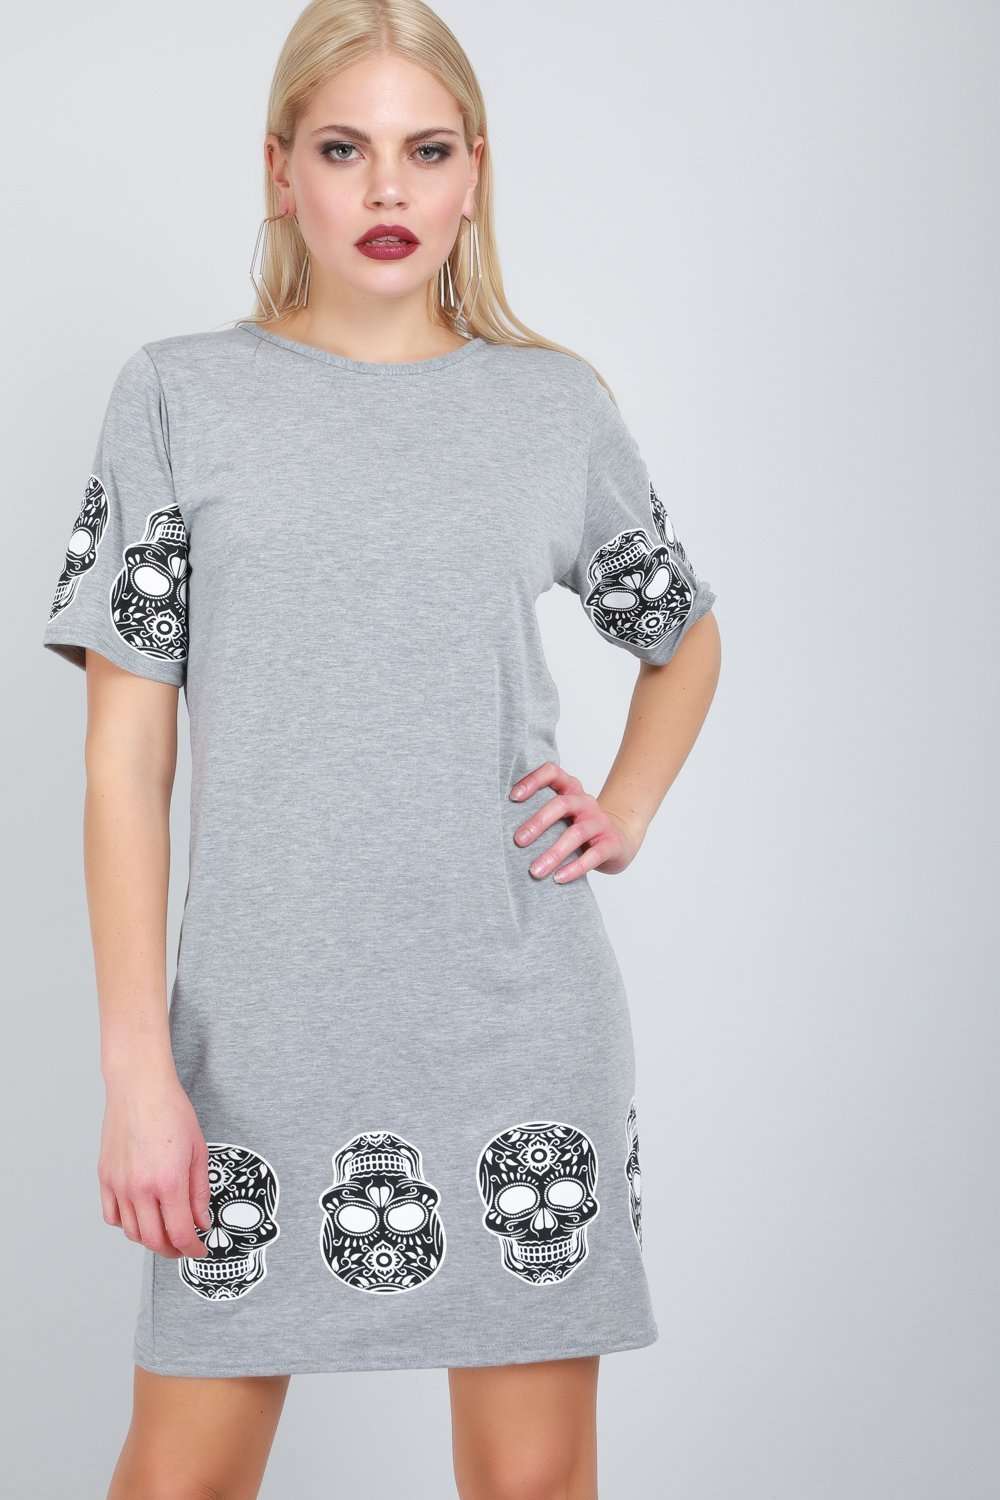 Skull Print Loose Fit White Tshirt Dress - bejealous-com